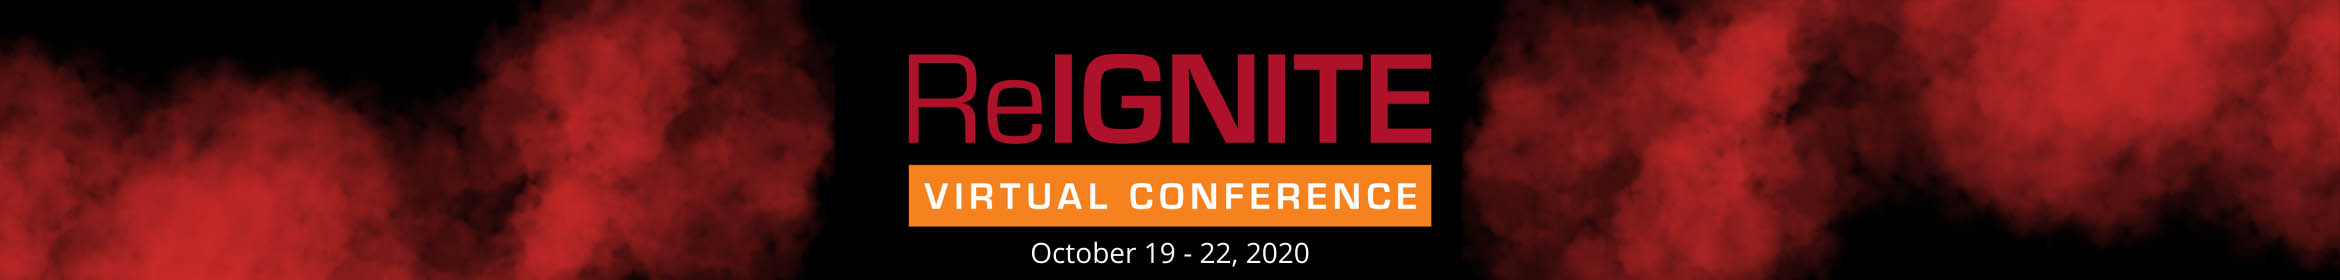 ReIGNITE Virtual Conference Main banner